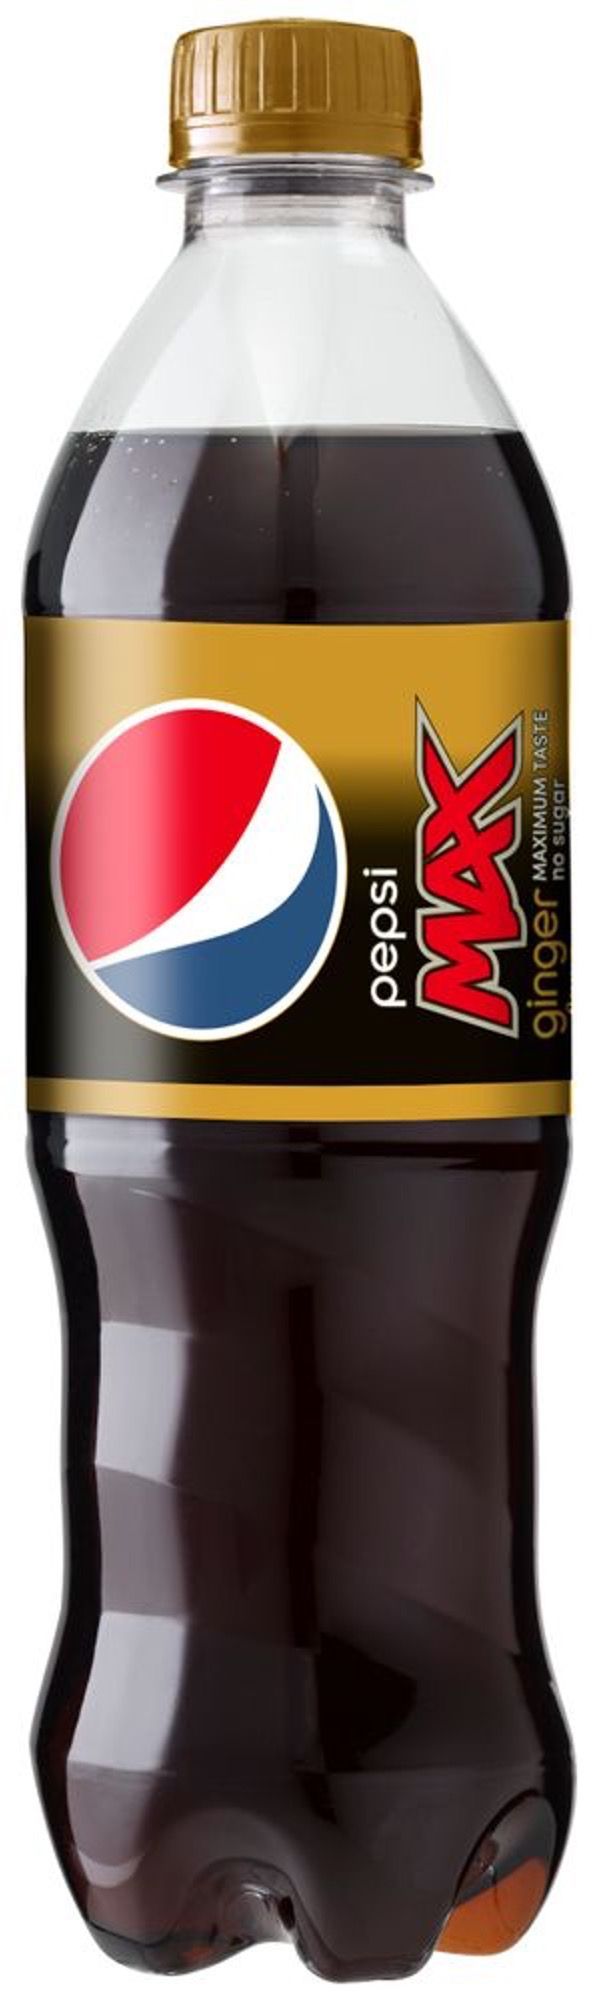 pepsi-max-zero-sugar-ginger-plastic-bottle-50cl_cola-zero.com